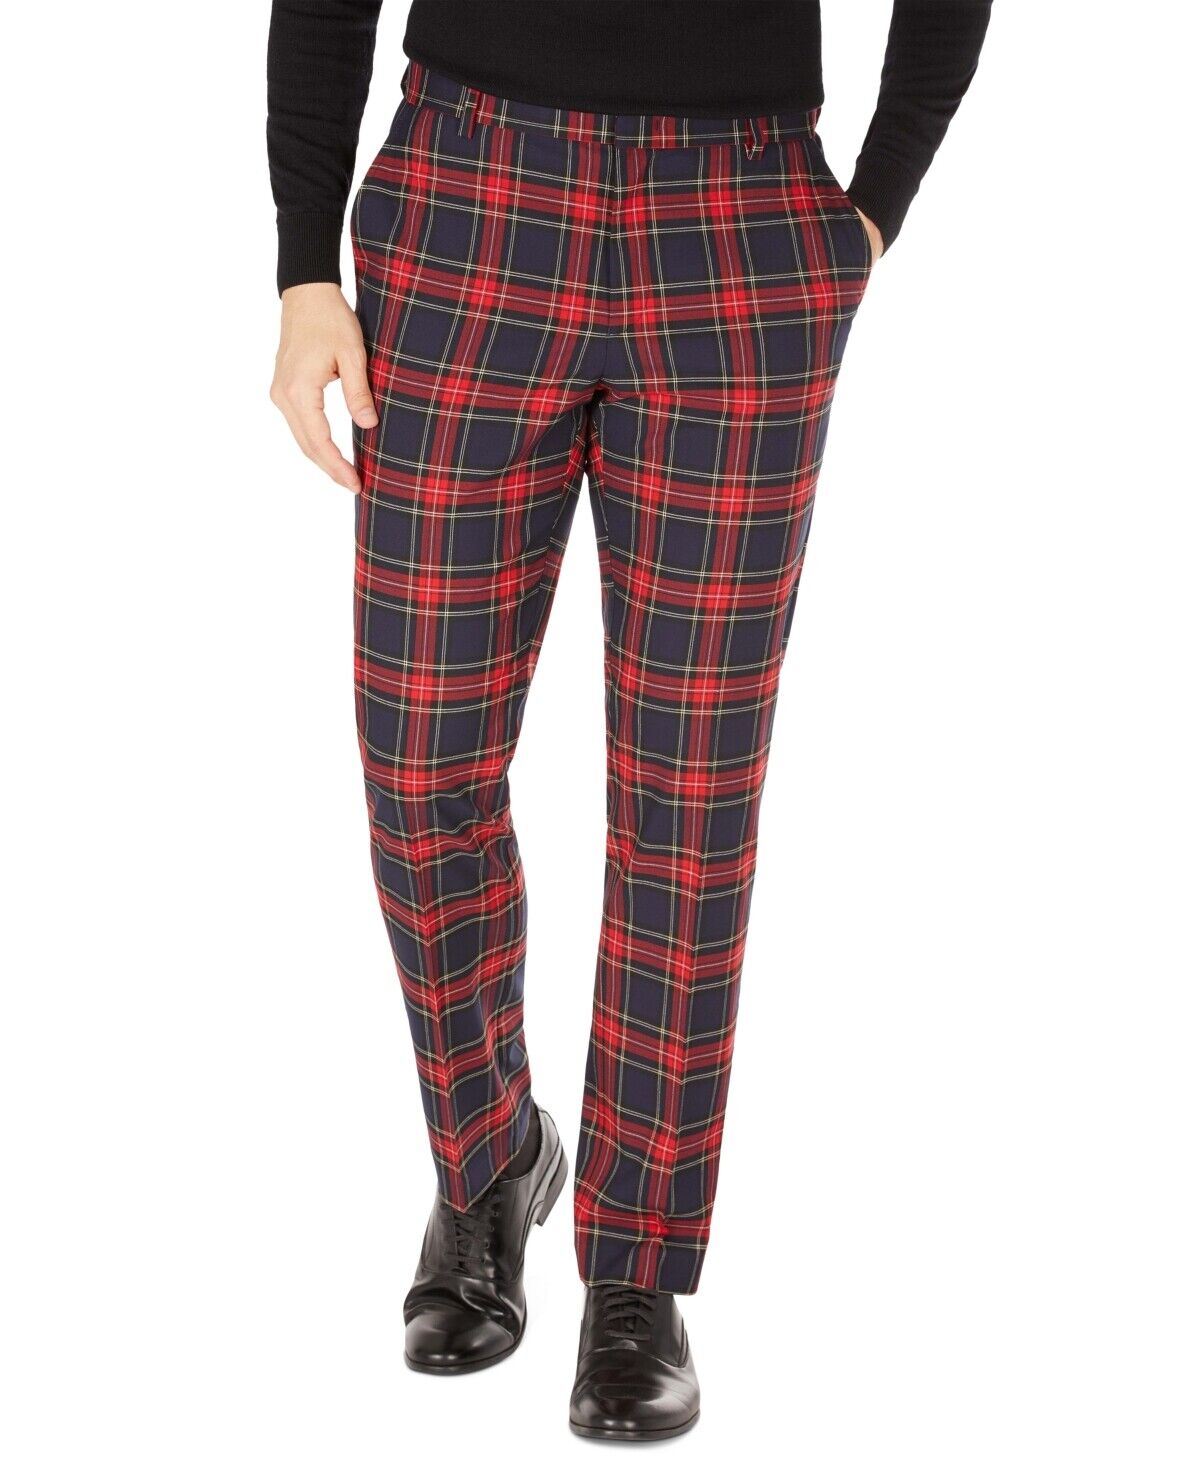 Tommy Hilfiger Men's Modern-Fit Stretch Dress Pants 34 x 30 Navy Red Plaid